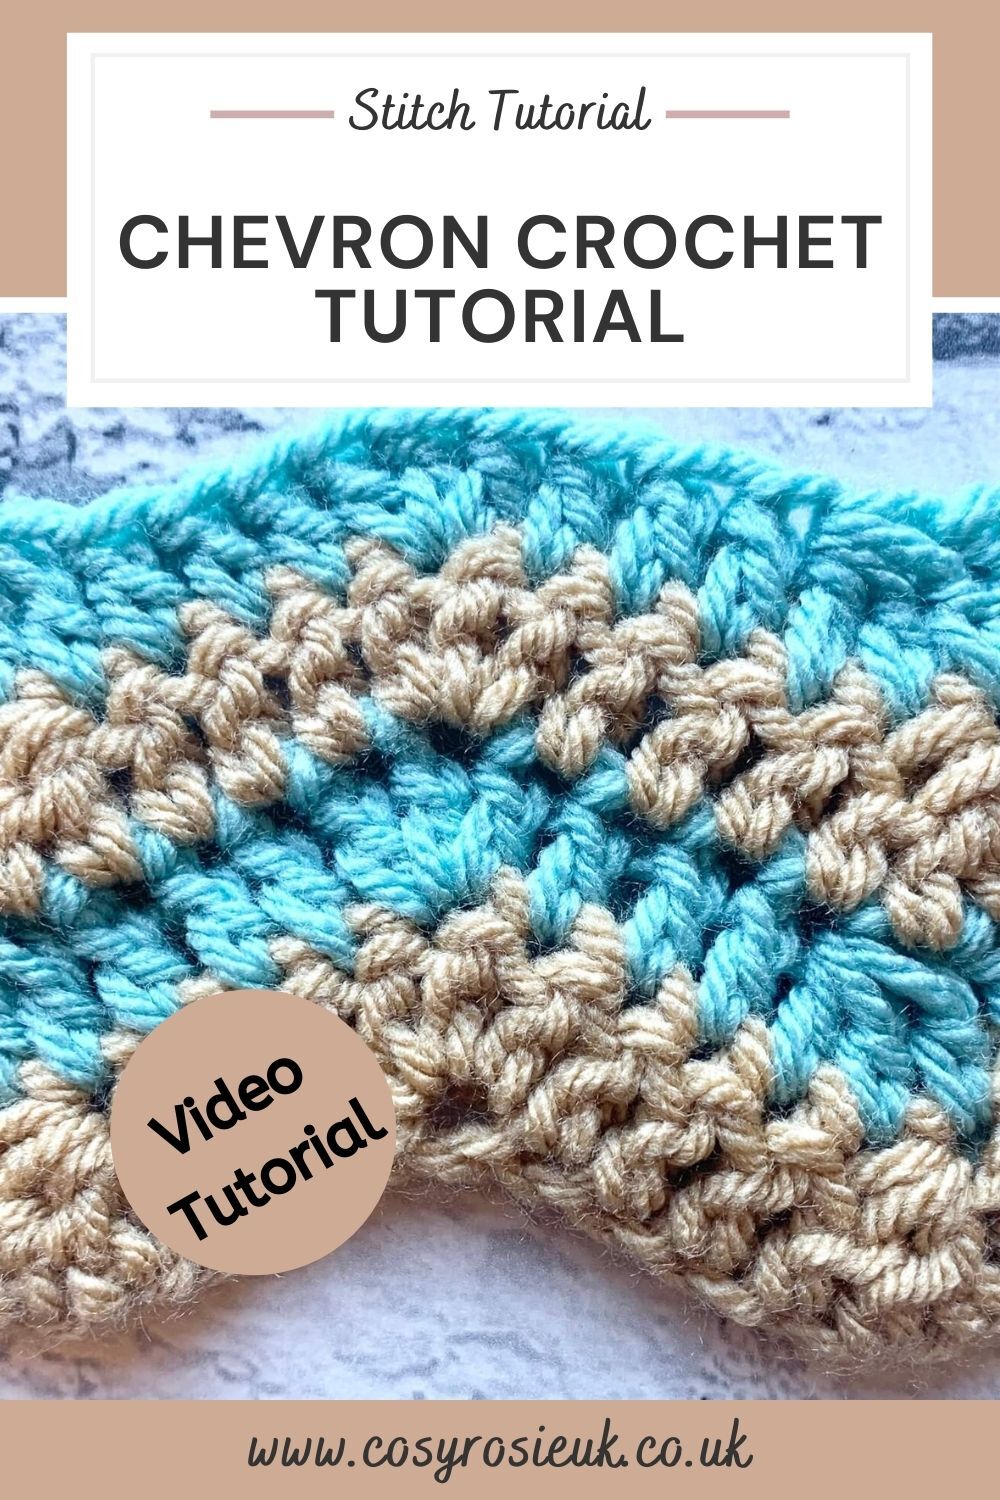 Chevron Crochet stitch pattern